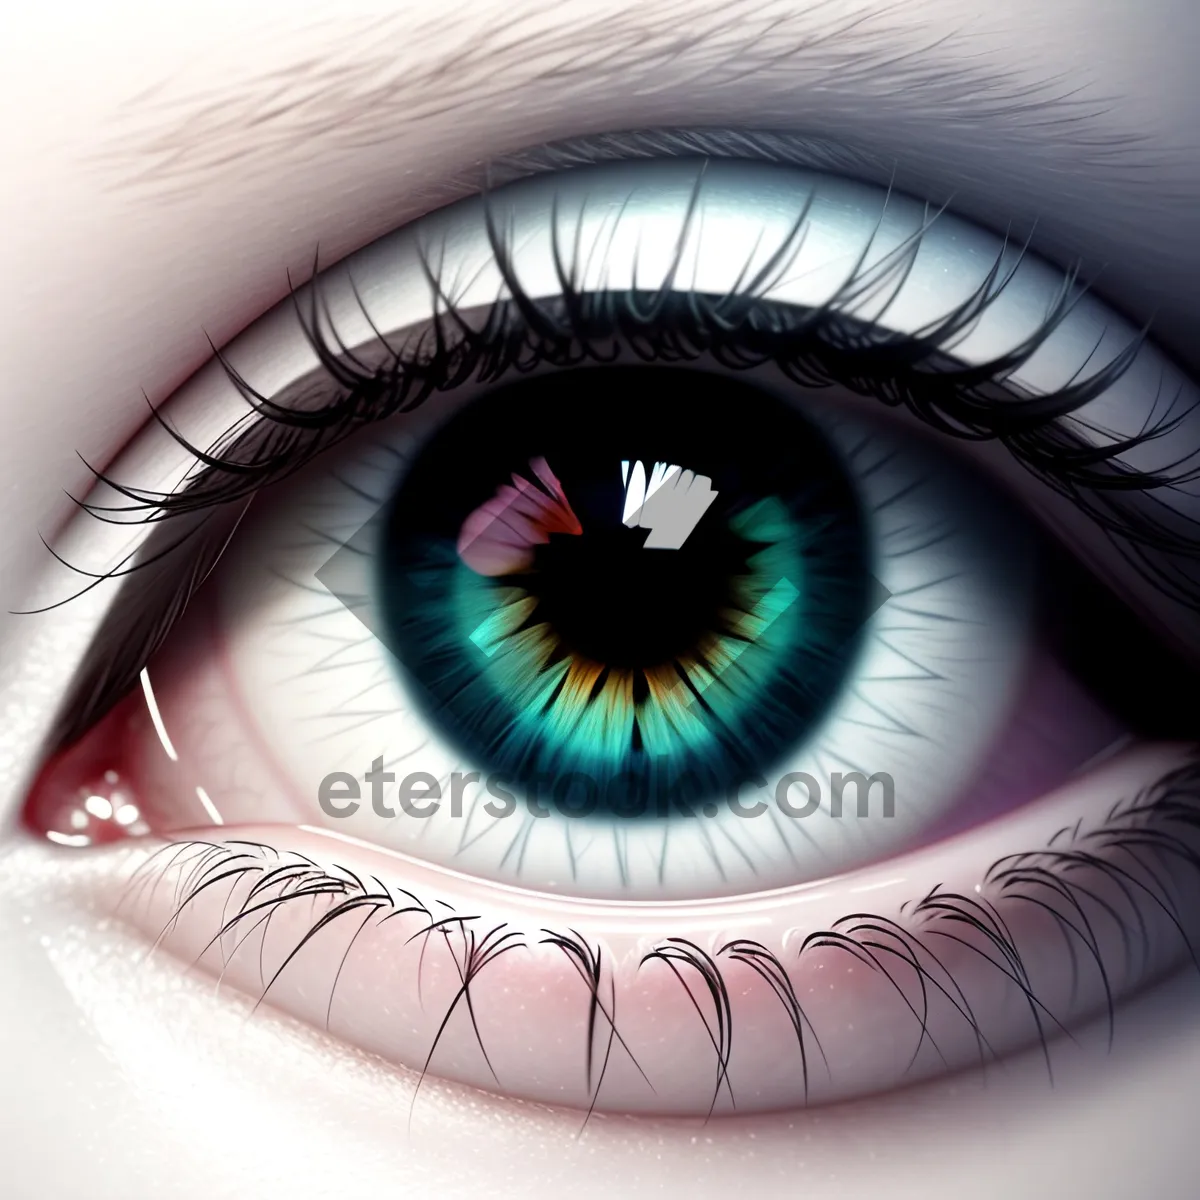 Picture of Closeup view of beautiful human eye.